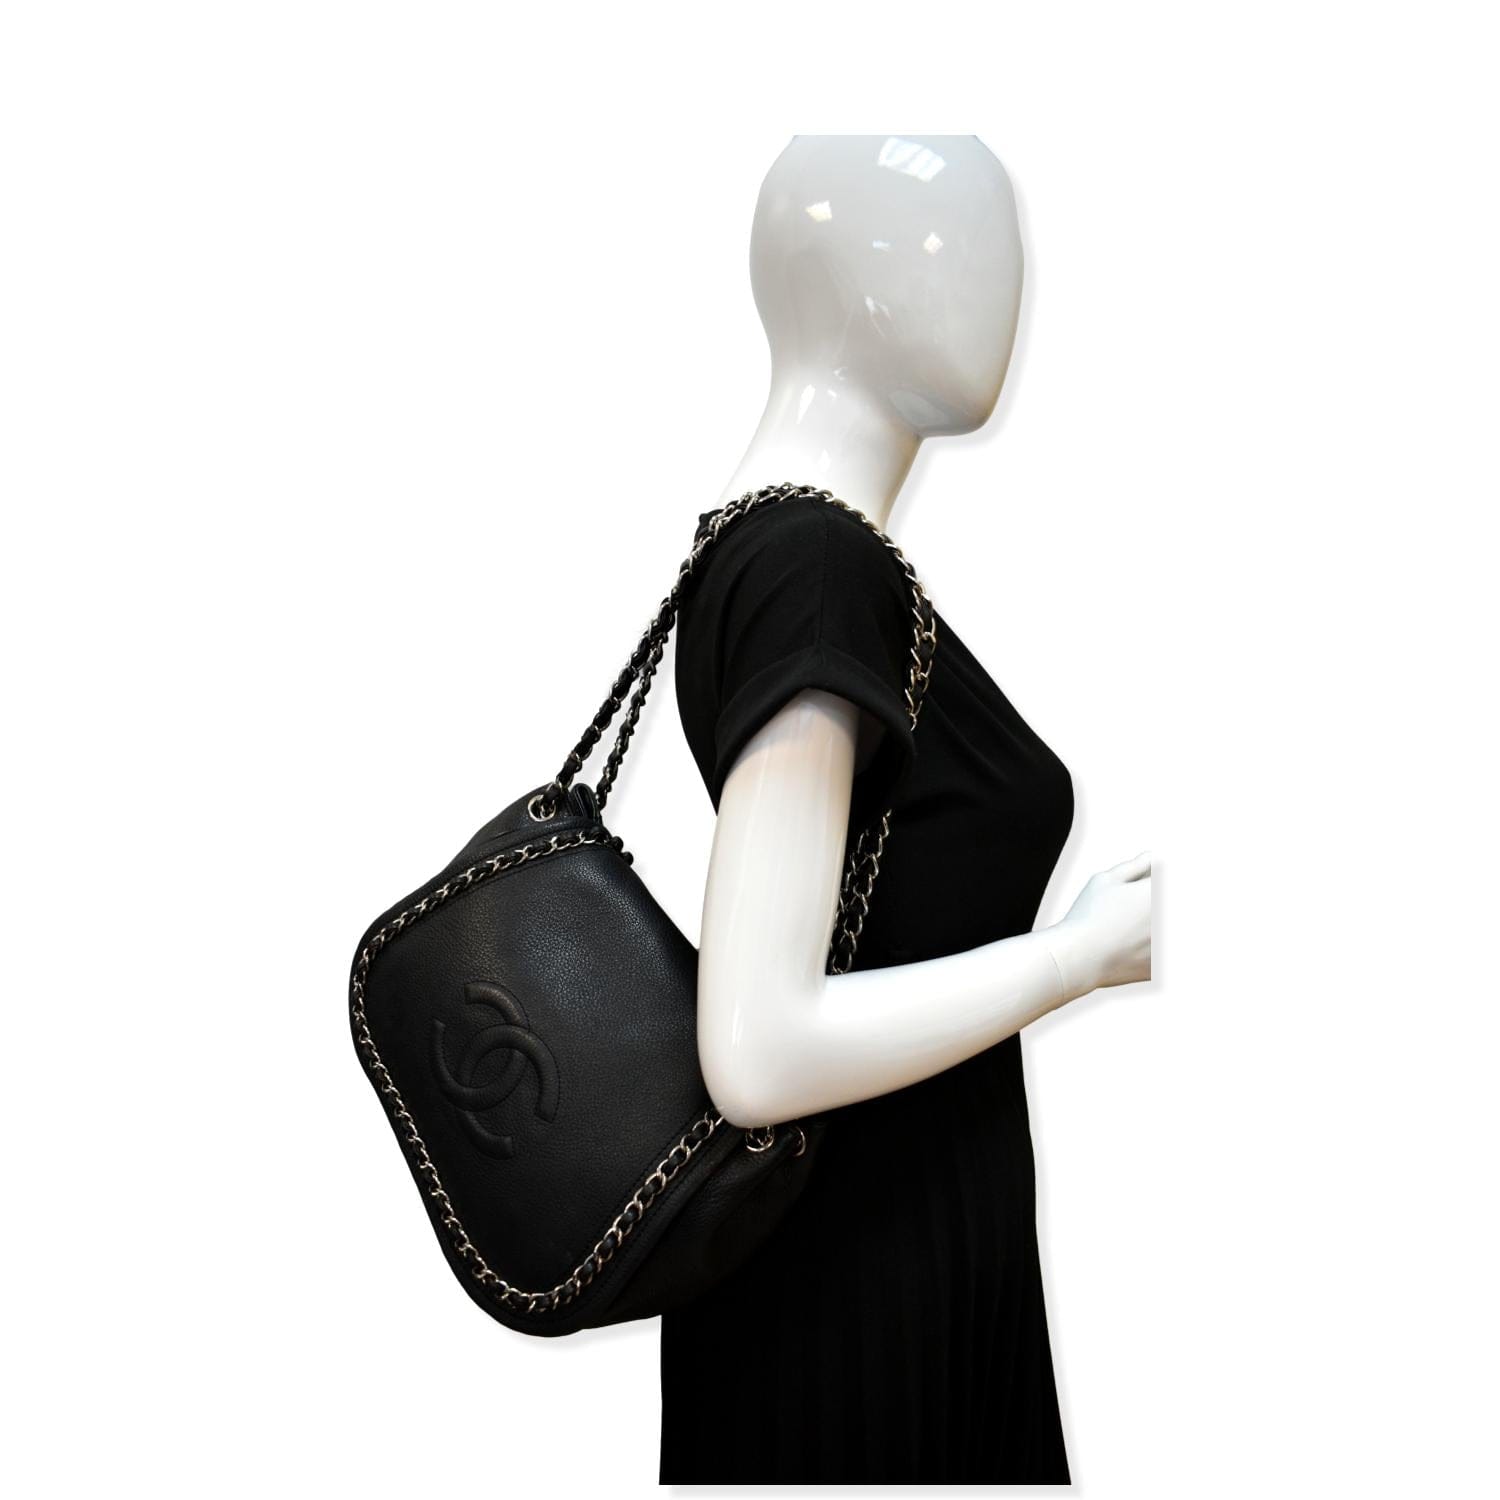 Chanel Luxe Ligne Accordion Flap Bag - Gold Shoulder Bags